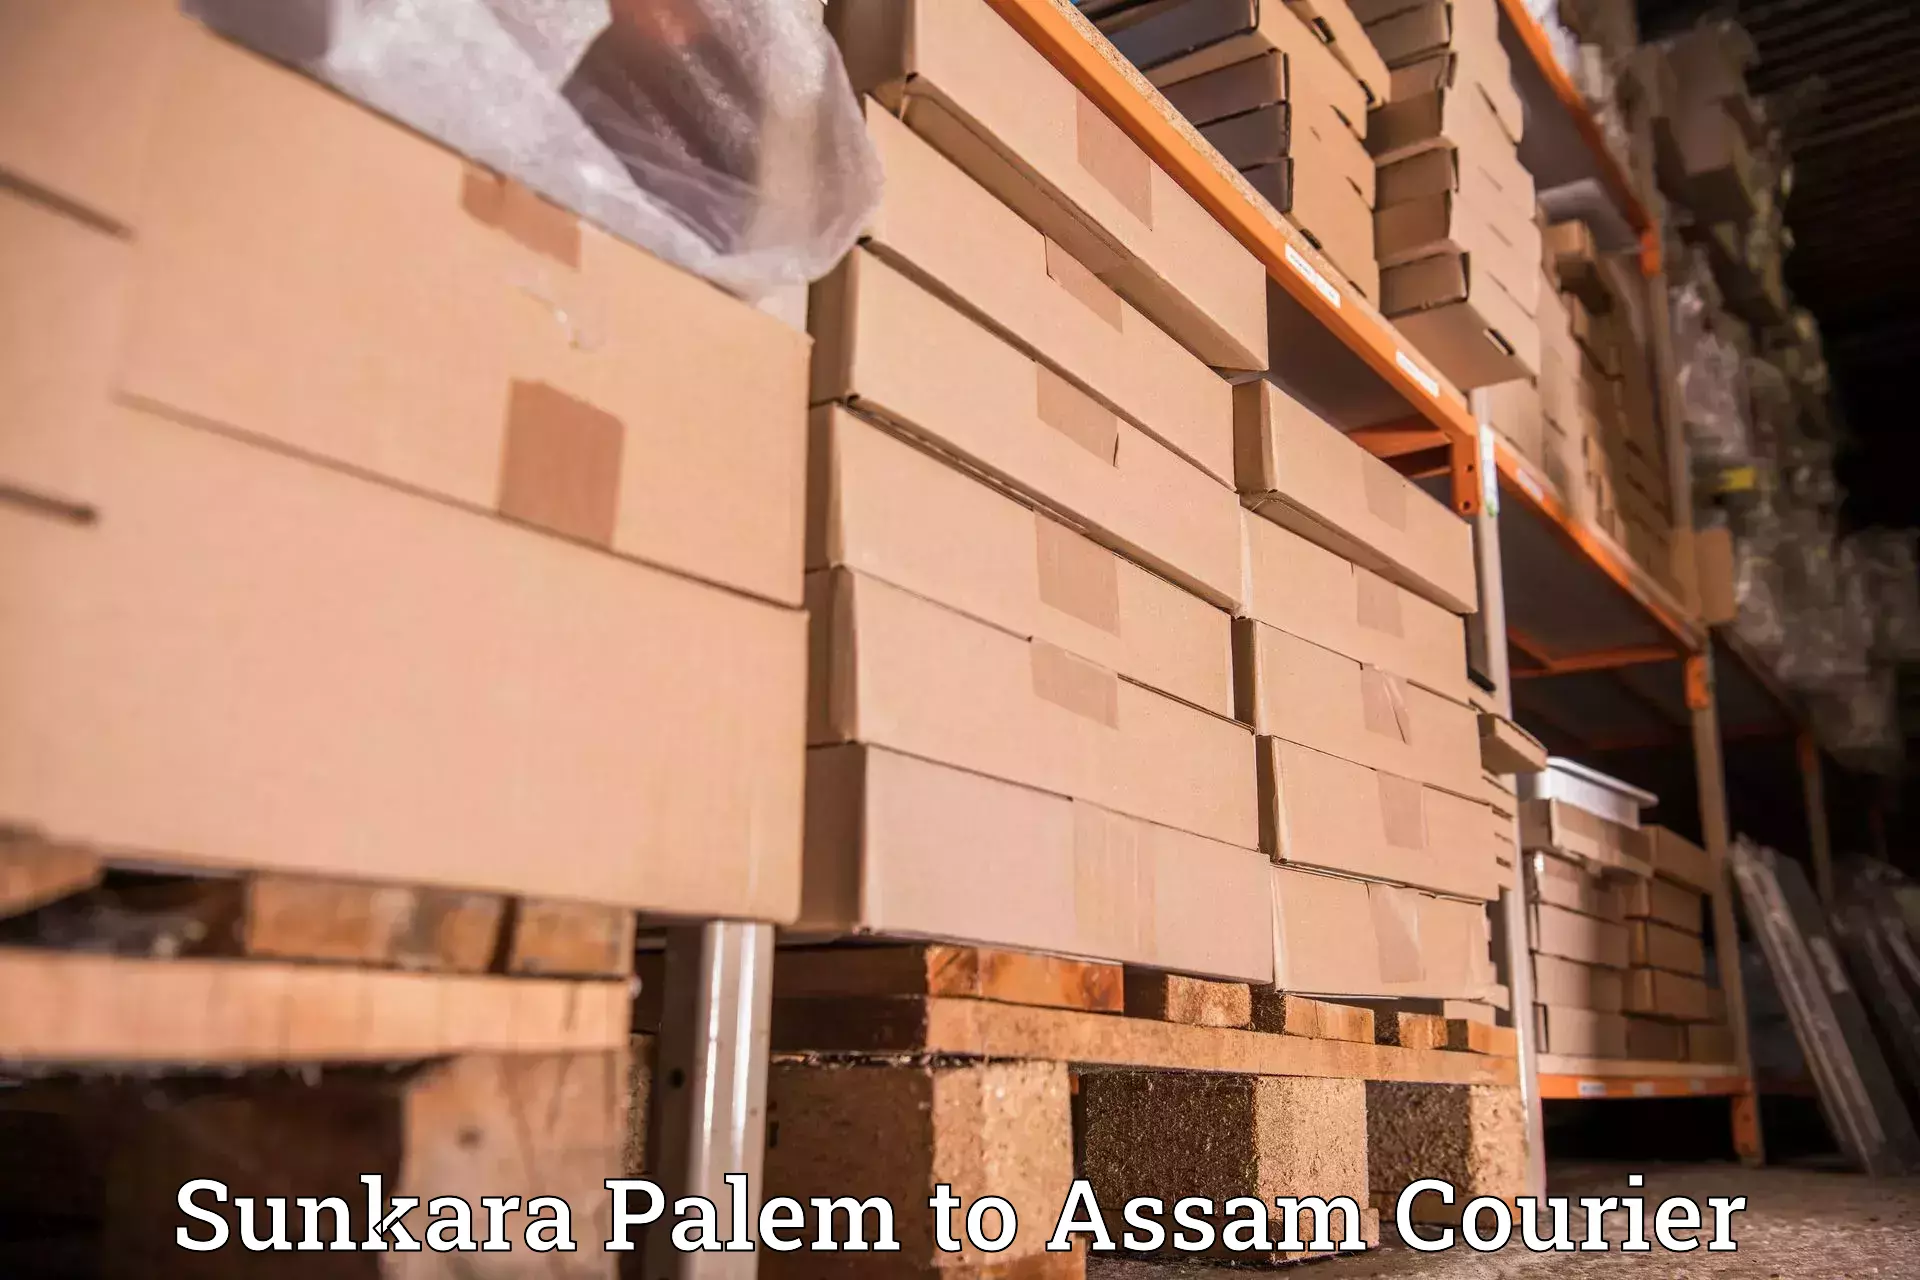 Courier service comparison Sunkara Palem to Pathsala